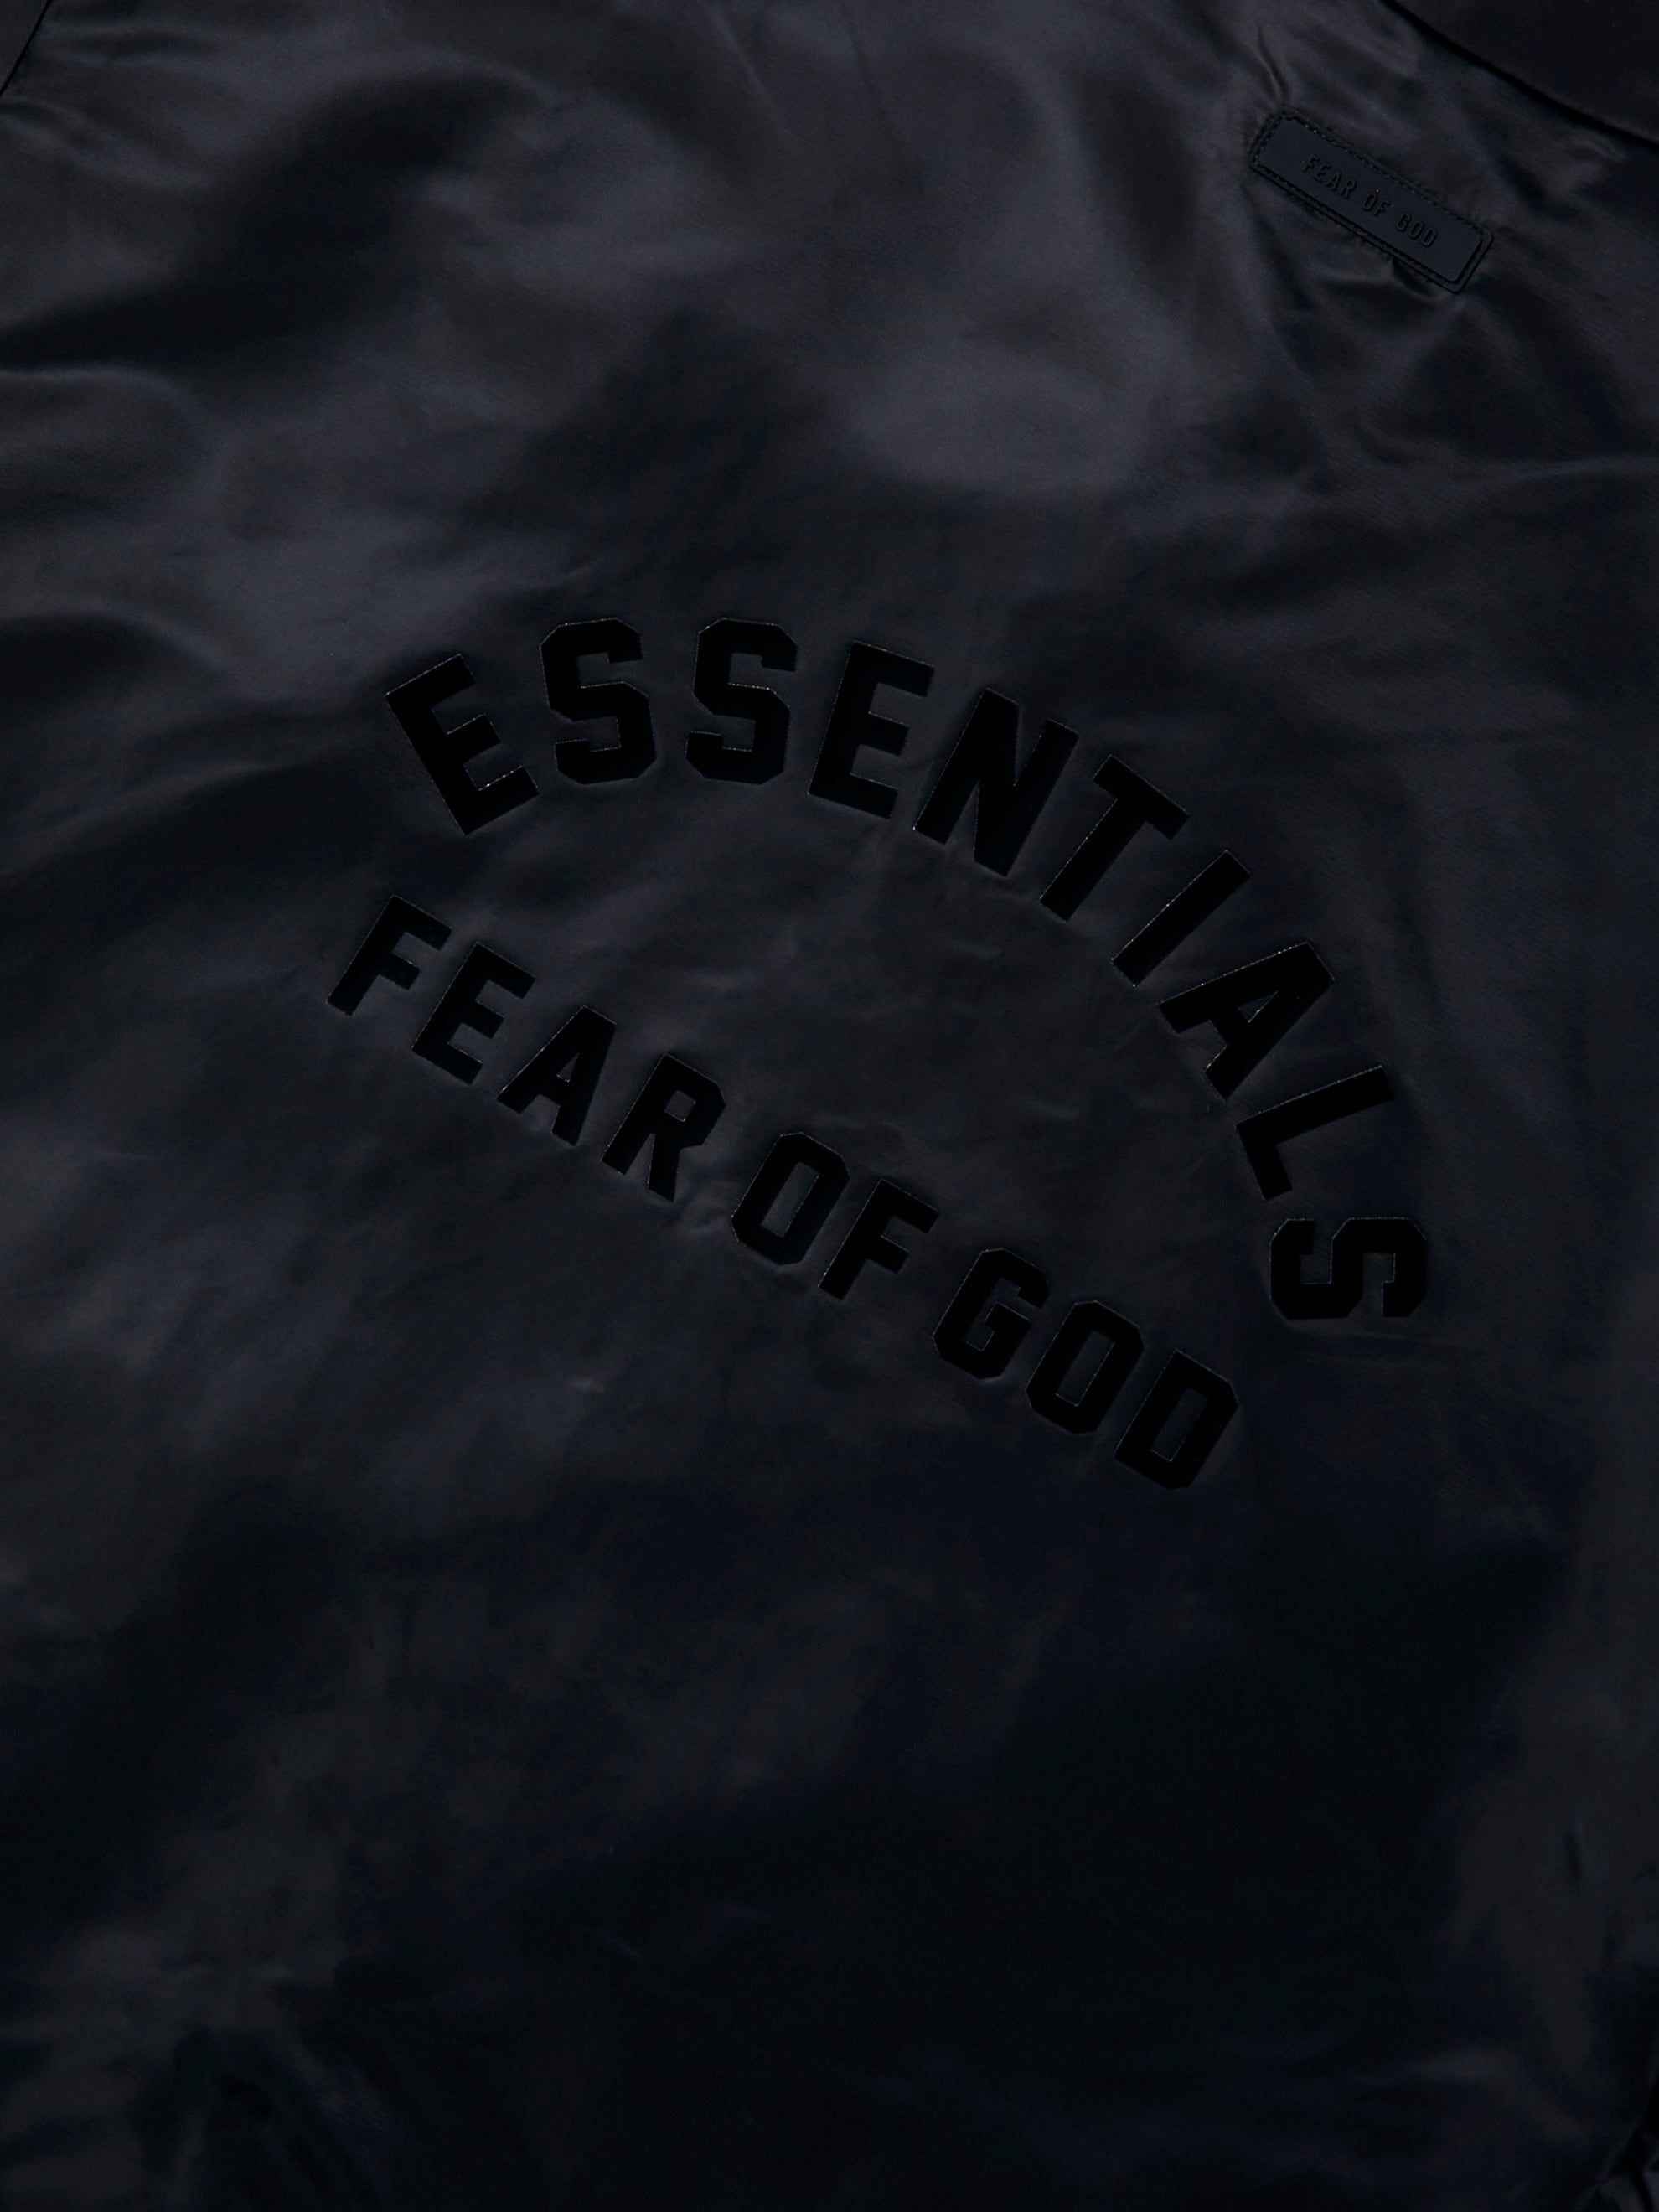 Buy Essentials Coaches Jacket (Black) Online at UNION LOS ANGELES